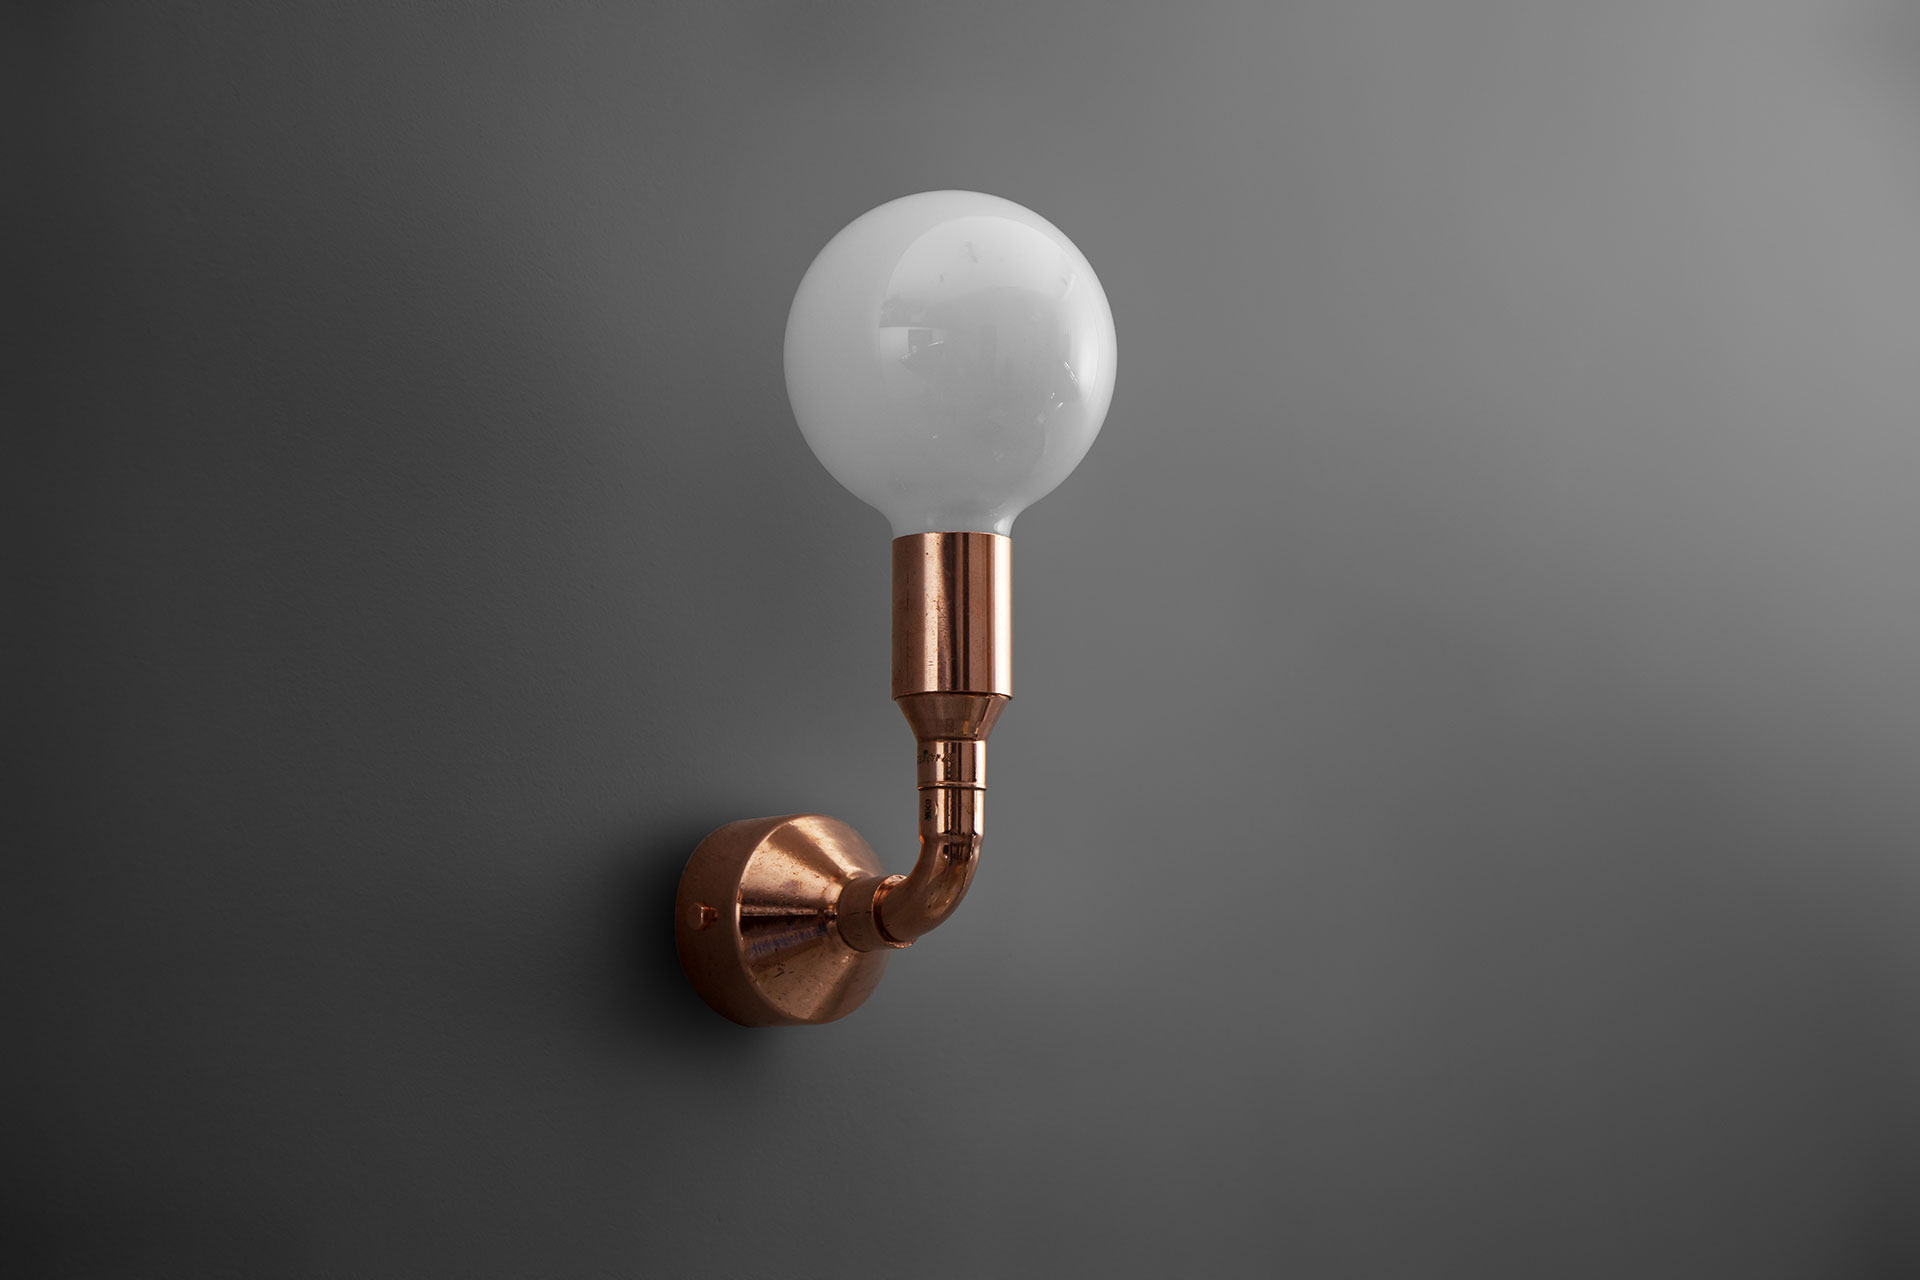 Copper pipe wall lamp in industrial design interior